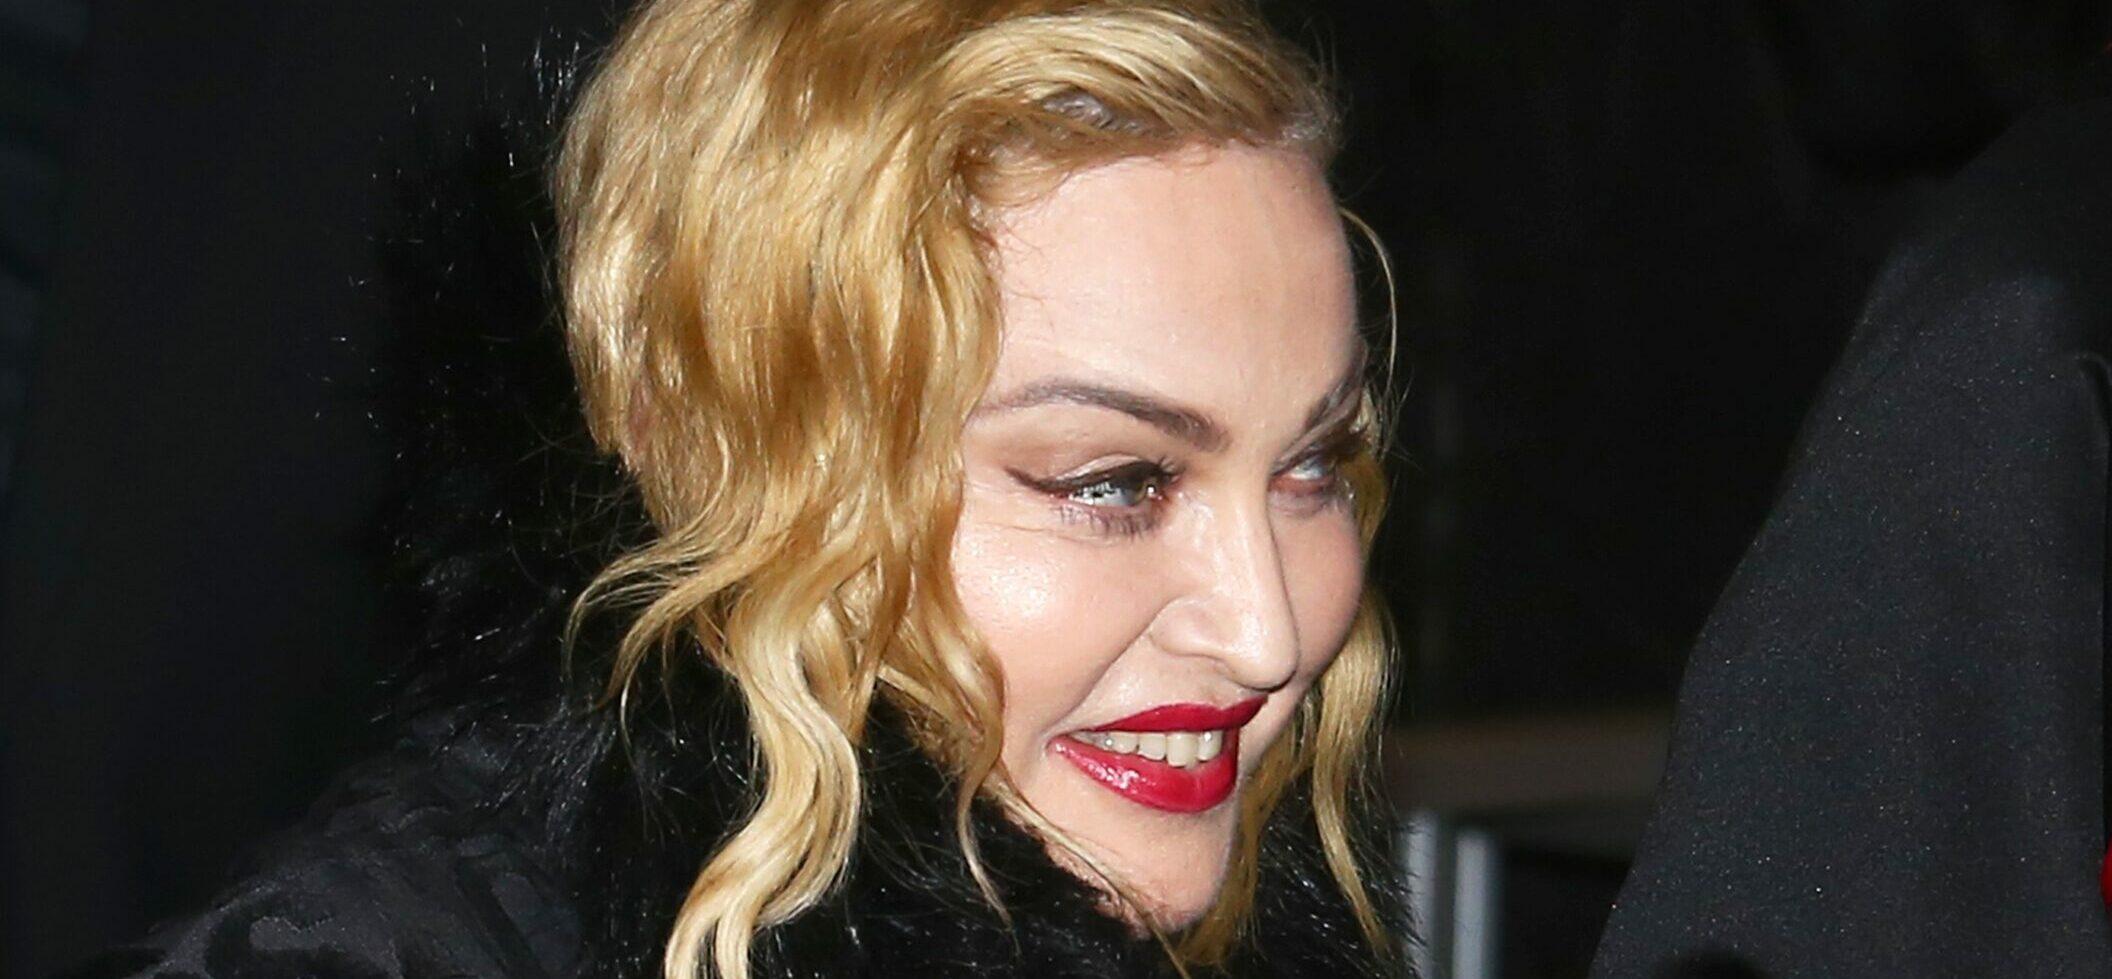 Madonna wearing versace